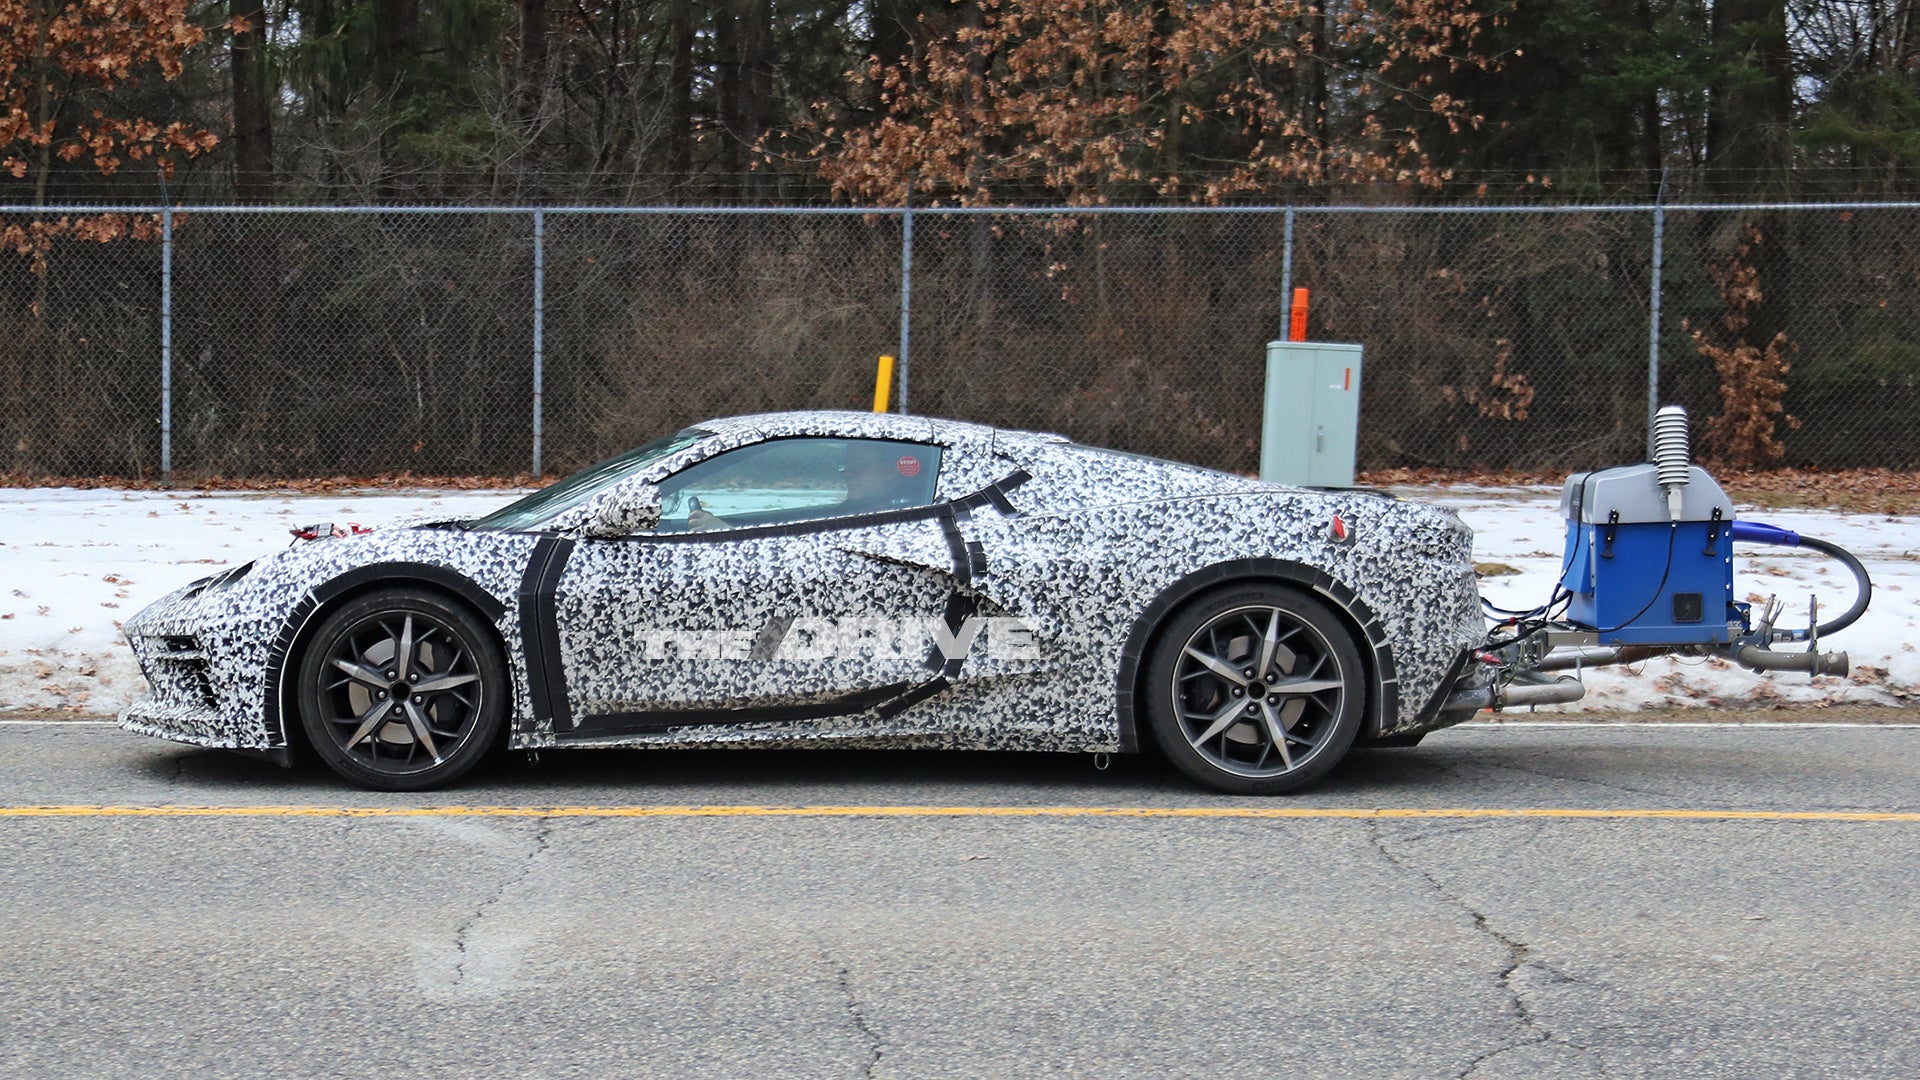 2021 Chevrolet Corvette C8 Hybrid Spy Photos: Is This the AWD Supercar Slayer?